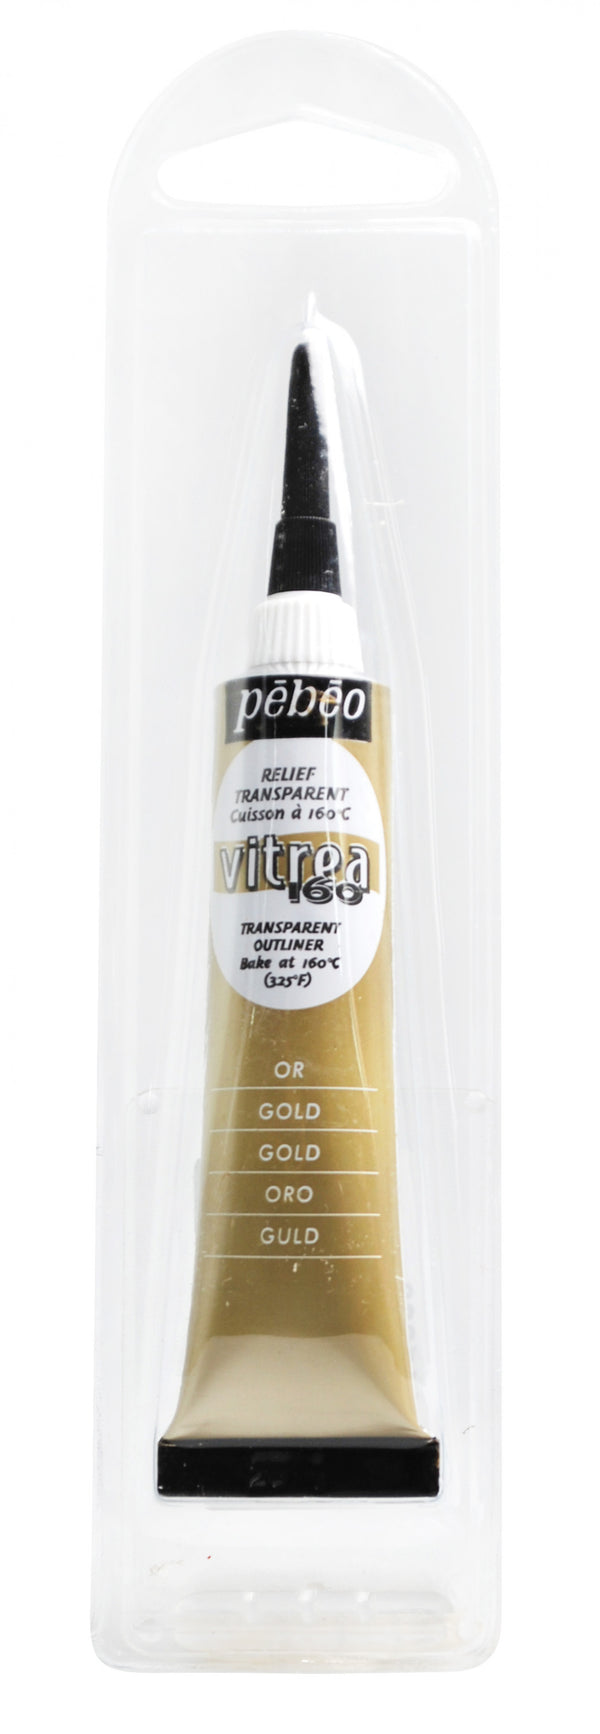 Pebeo Vitrea 160 Glossy Outliner Paints 20ml#Colour_GOLD BLISTER